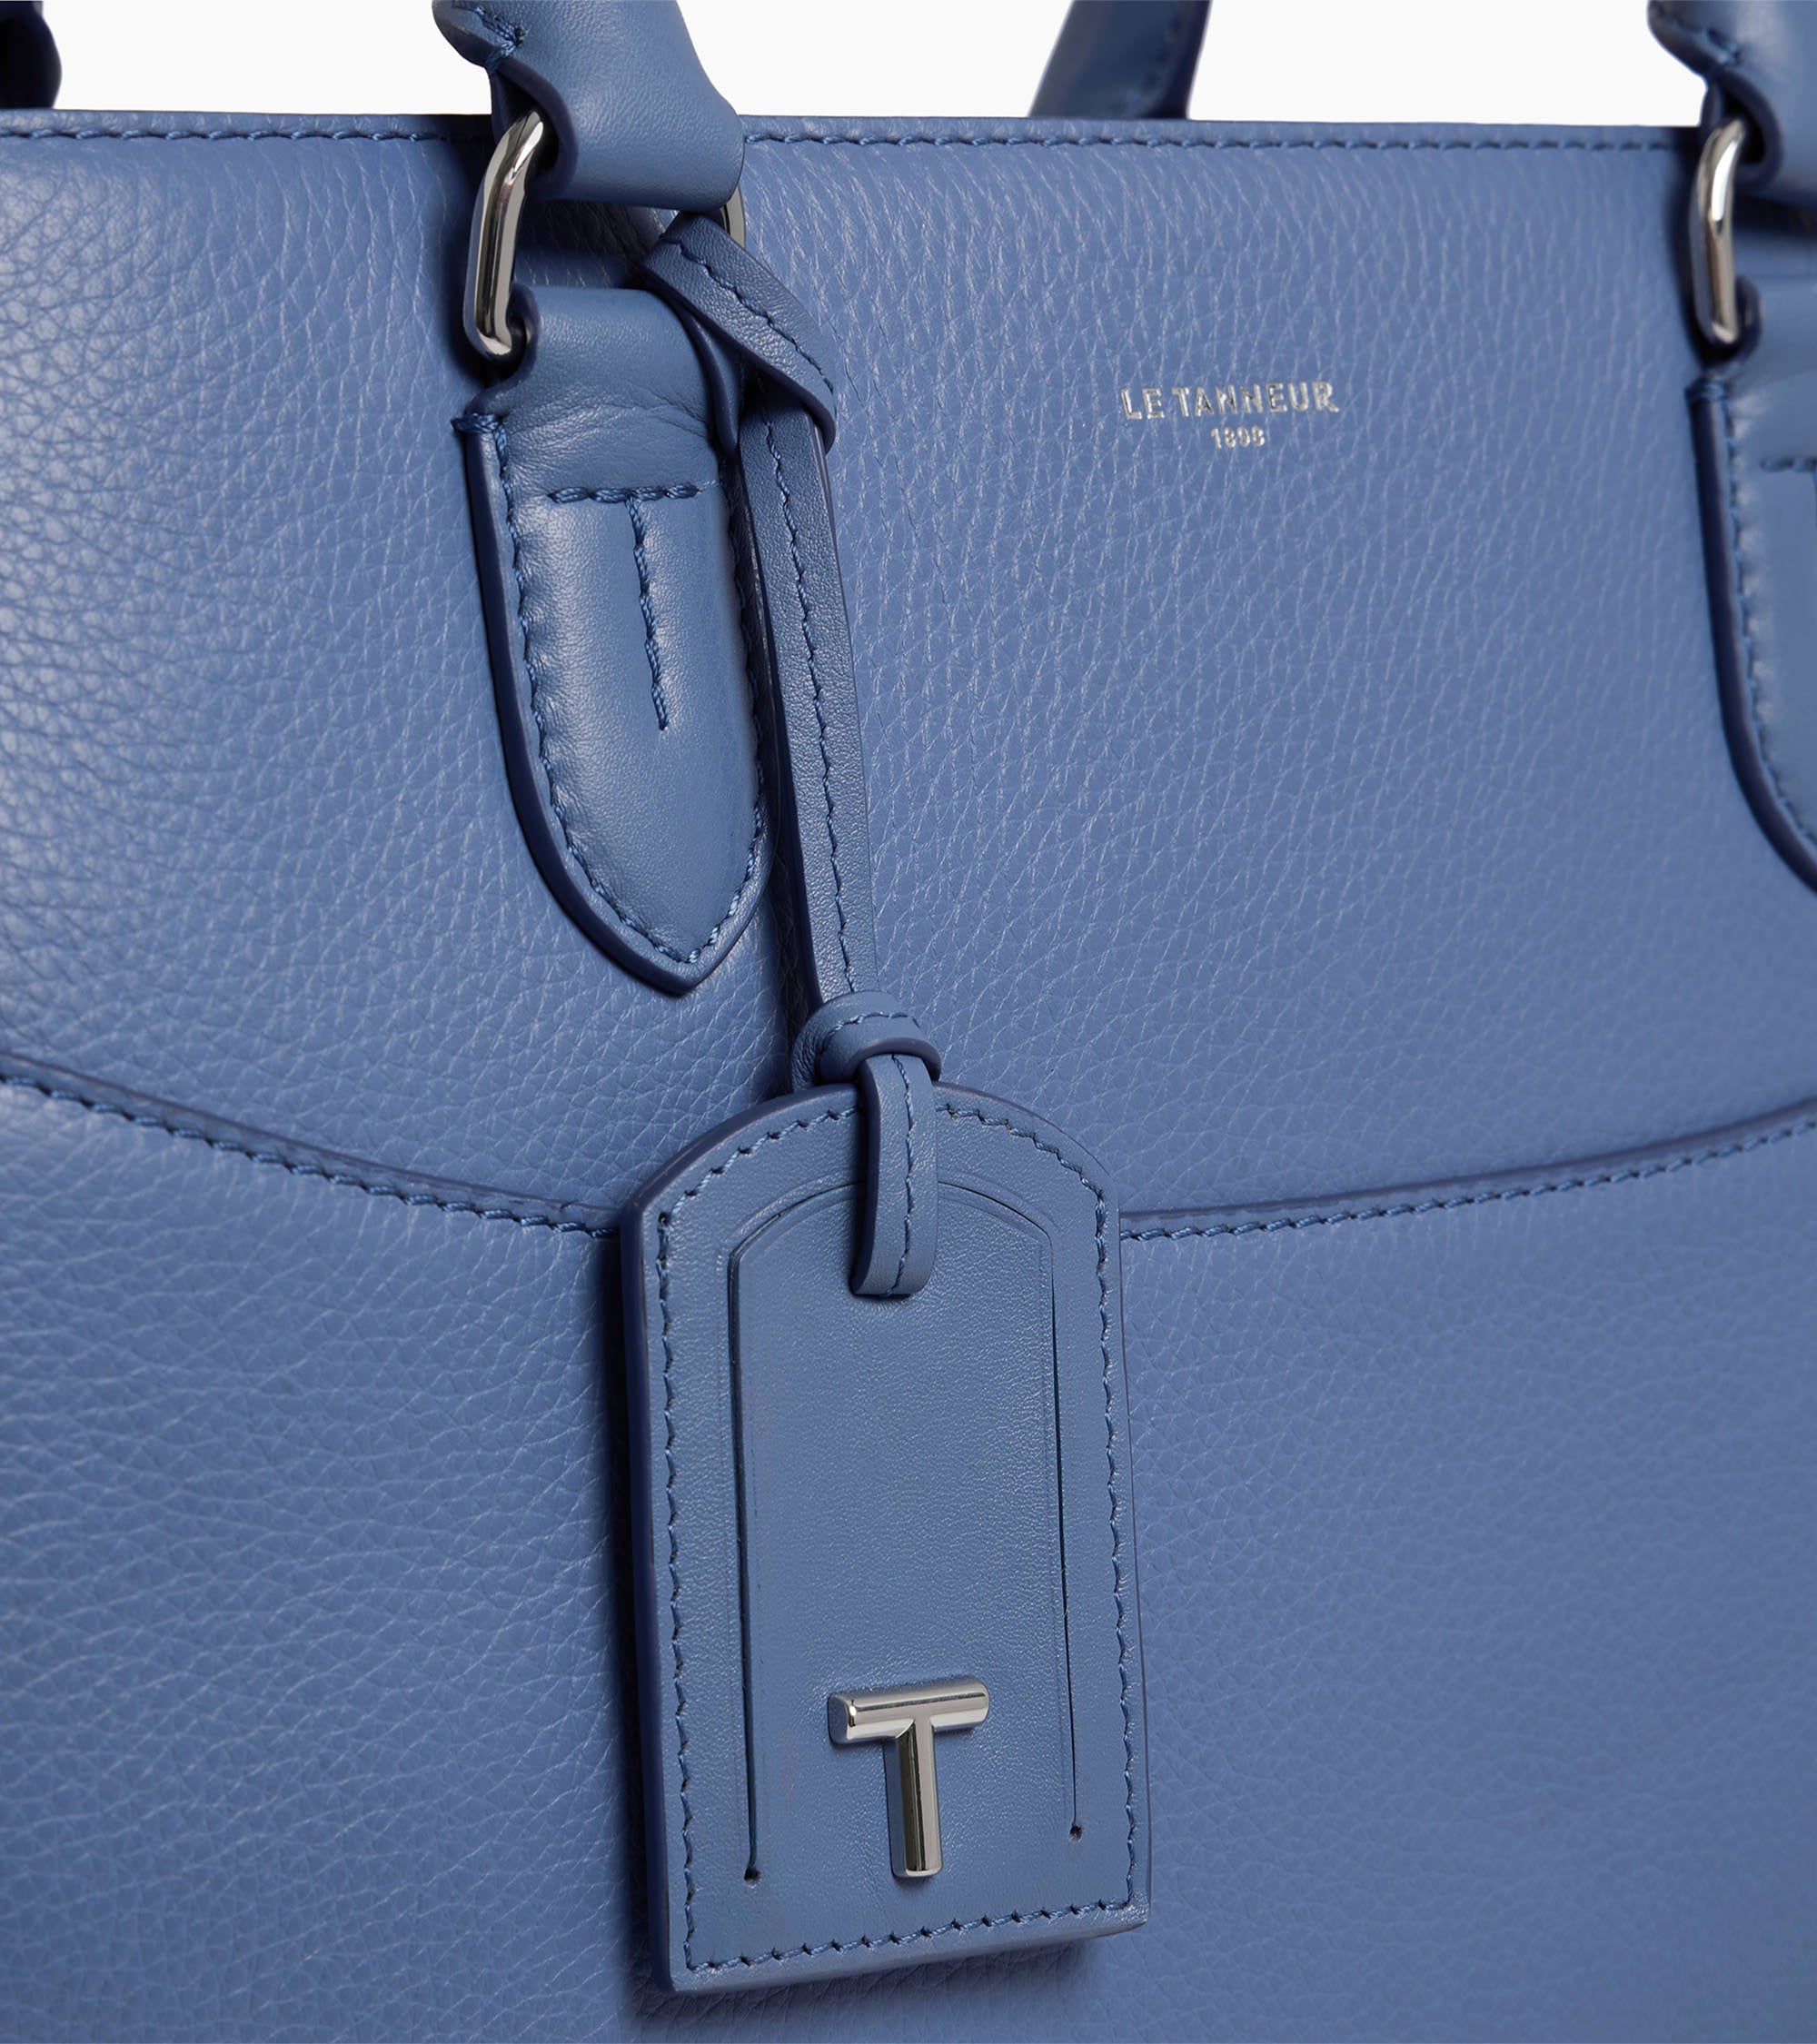 Romy large smooth grained leather handbag